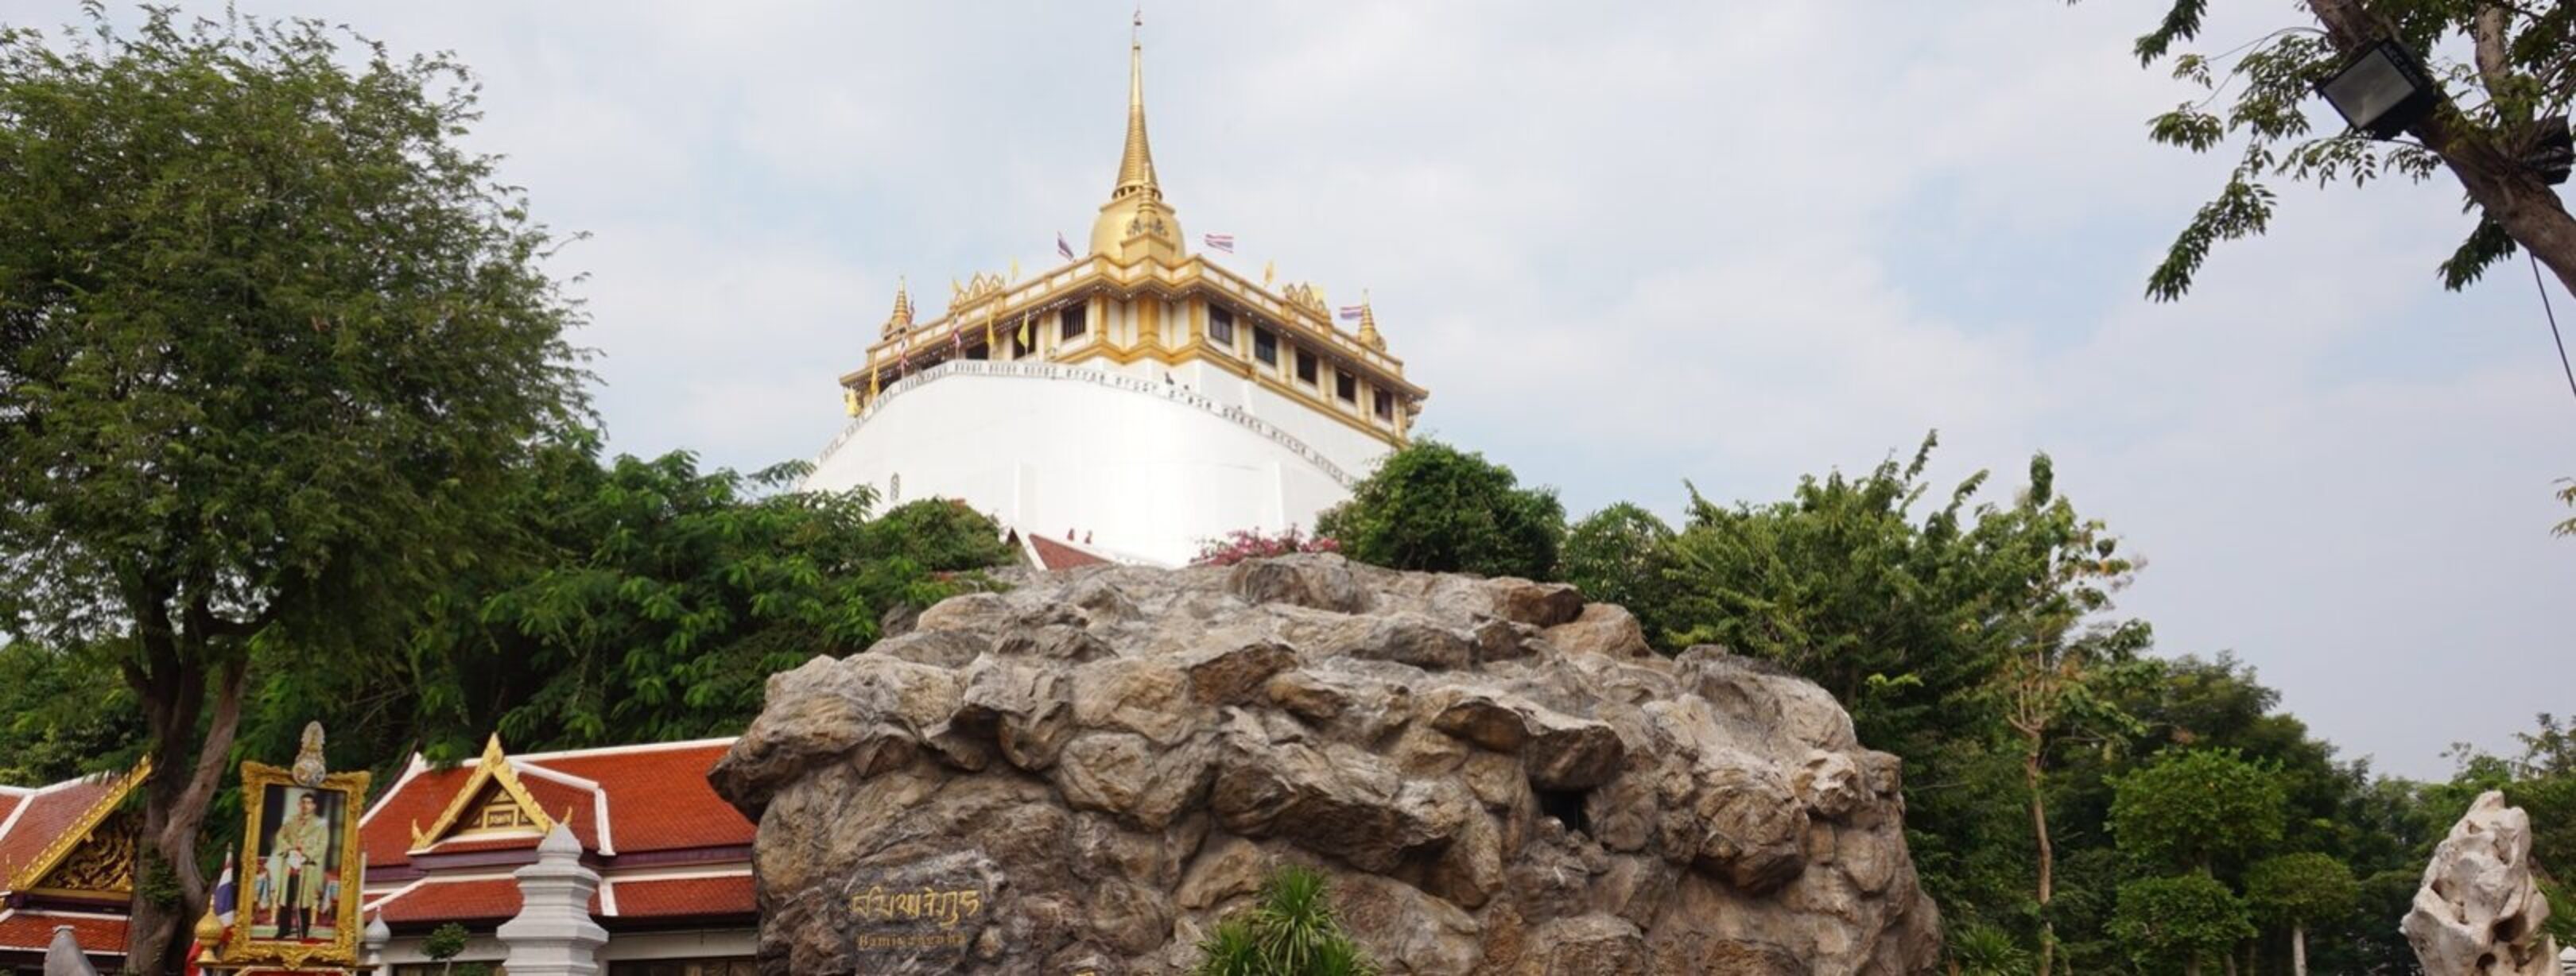 1620-Wat Saket_Golden Mount_Bangkok_World of Travolution360_Flickr